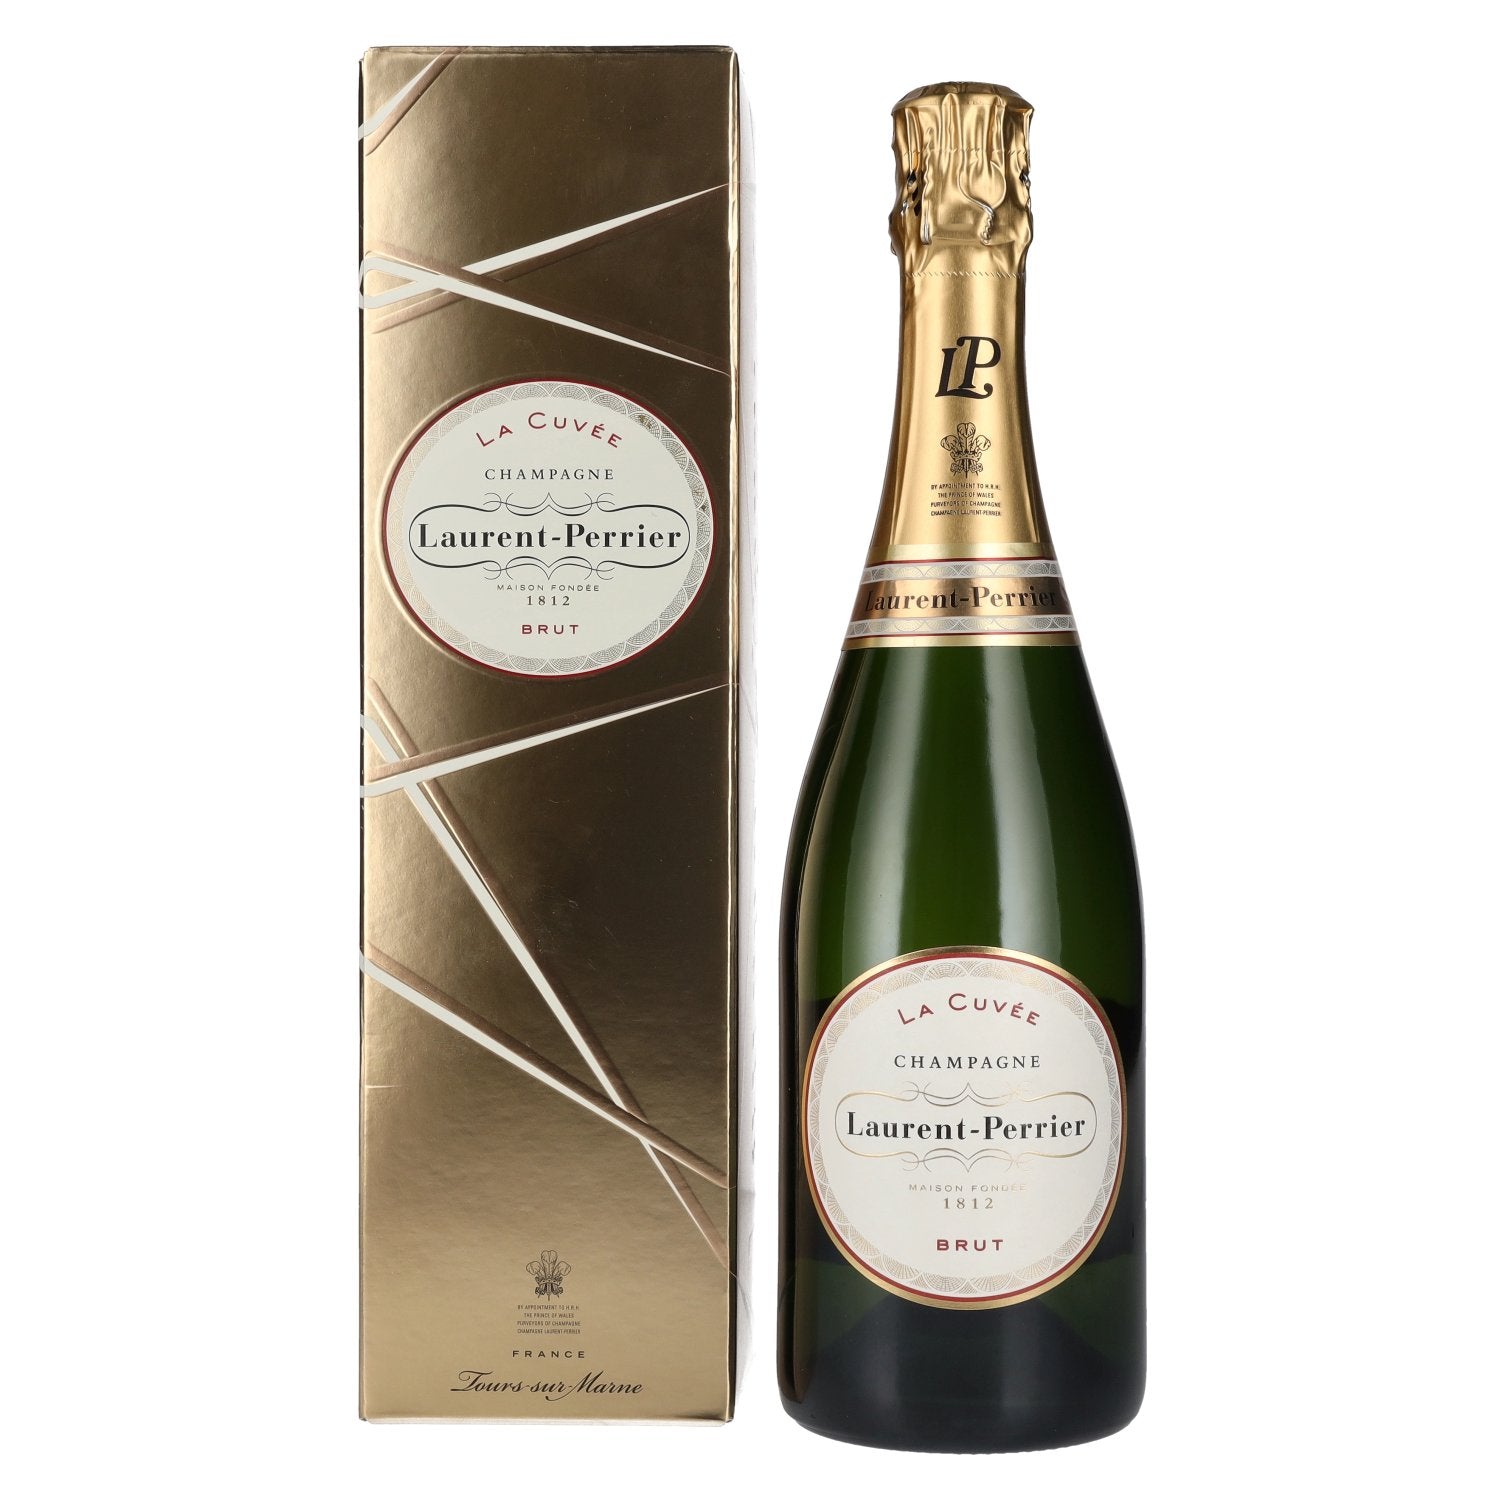 Laurent Perrier Champagne LA CUVEE Brut 12% Vol. 0,75l in Giftbox